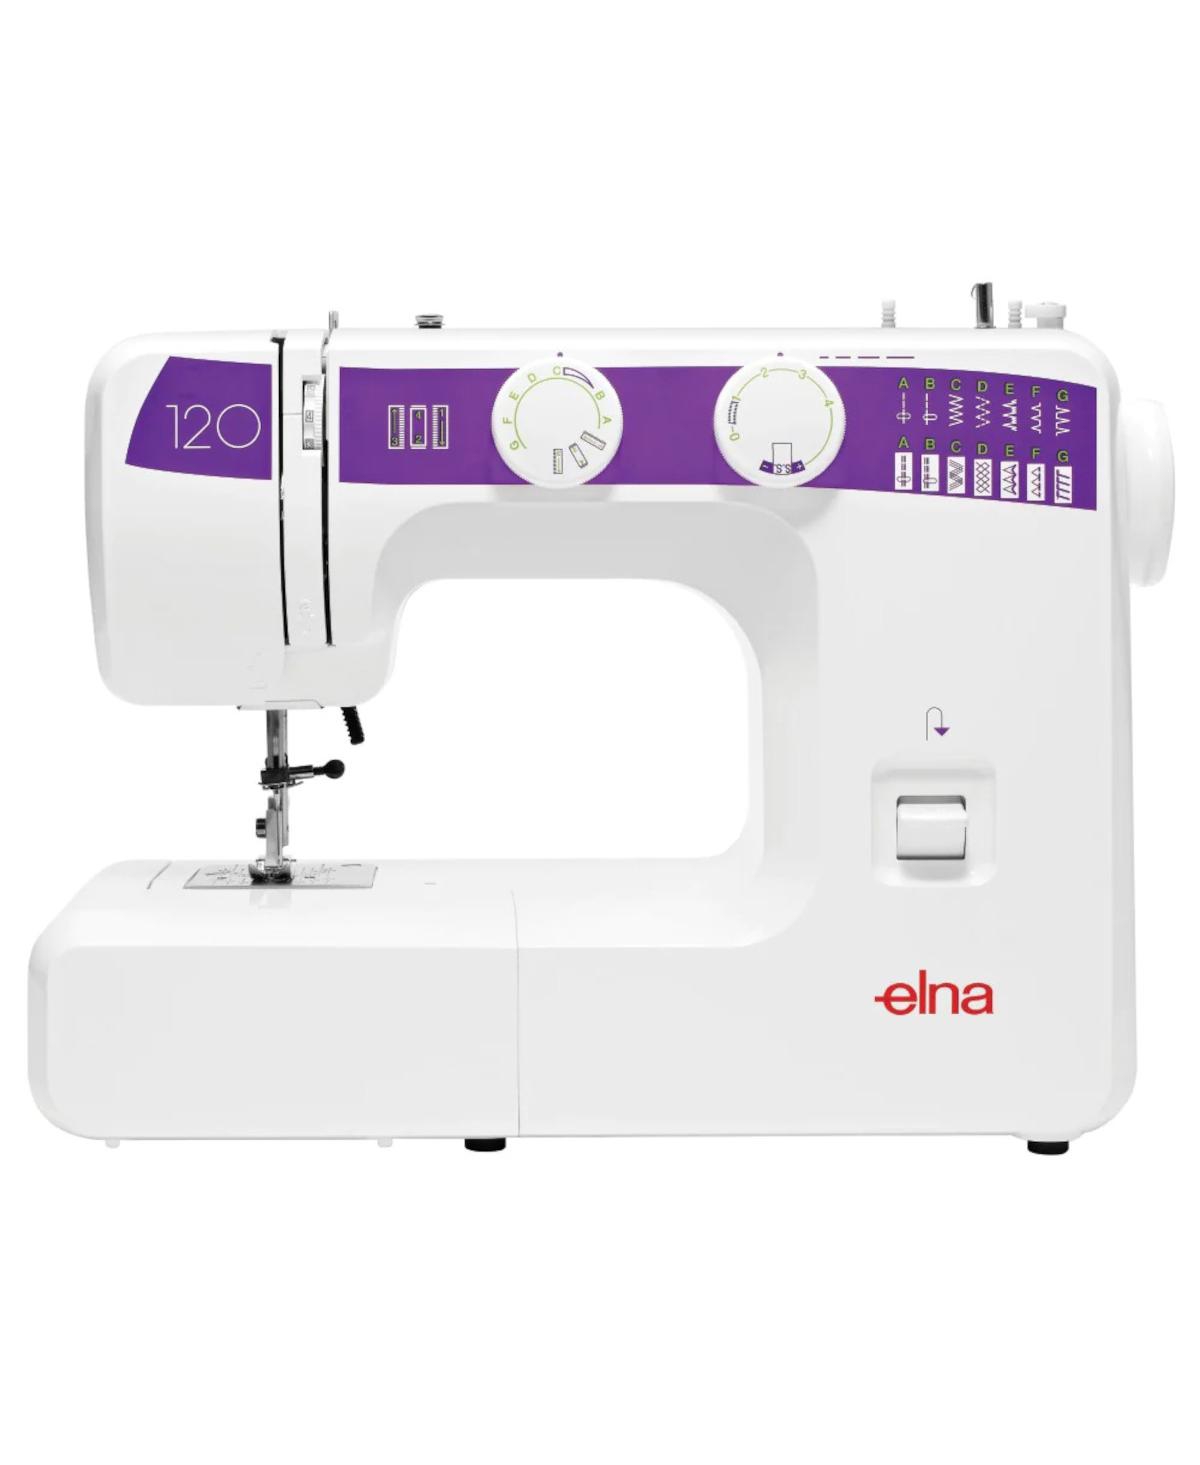 eXplore 120 Sewing Machine - White